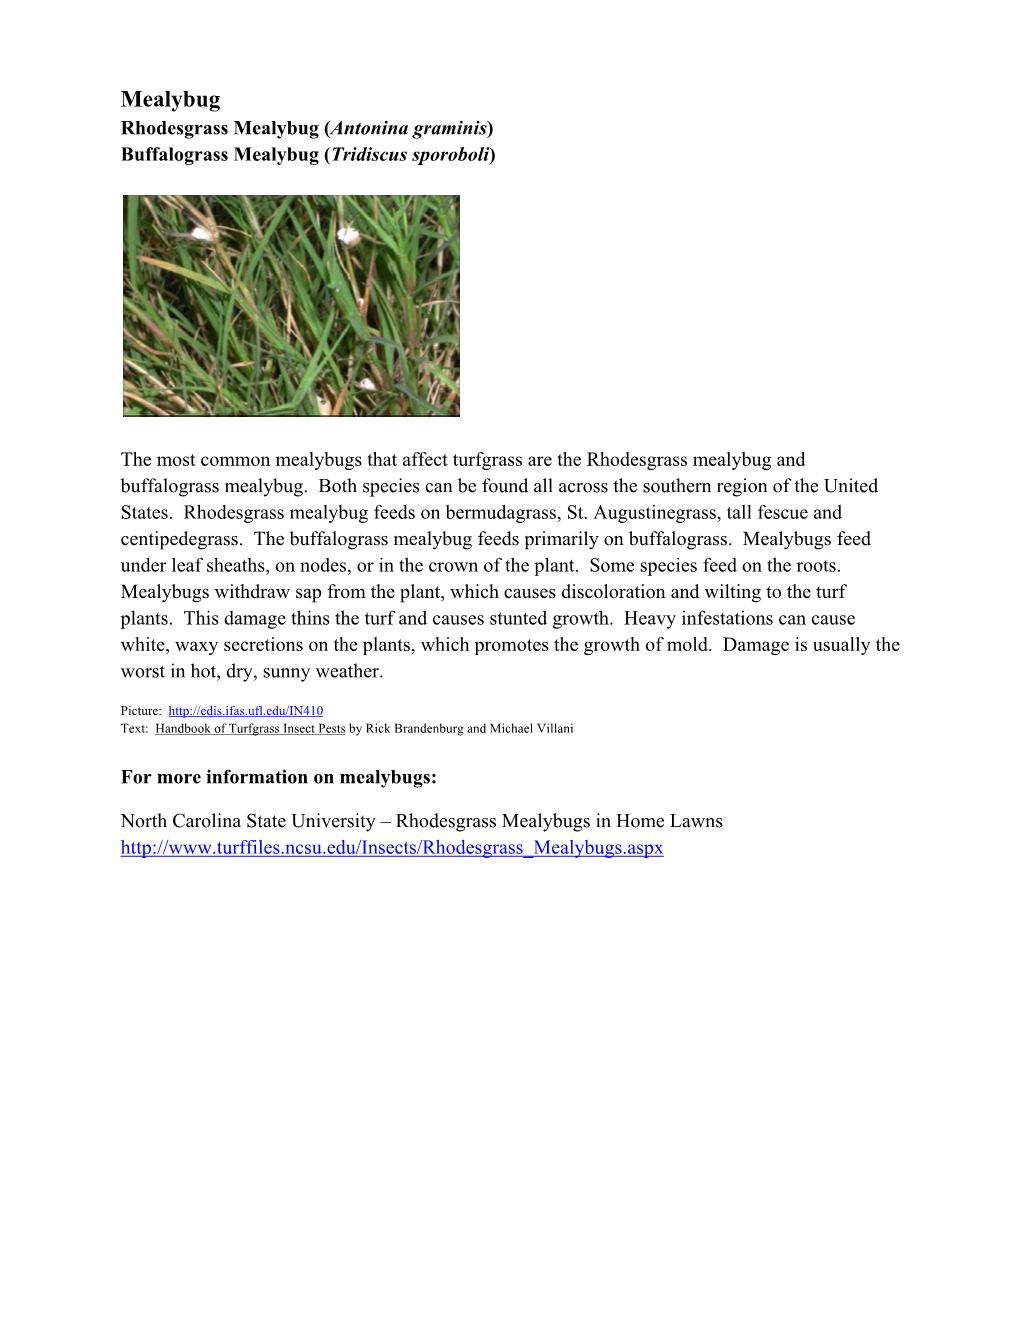 Mealybug Rhodesgrass Mealybug (Antonina Graminis) Buffalograss Mealybug (Tridiscus Sporoboli)